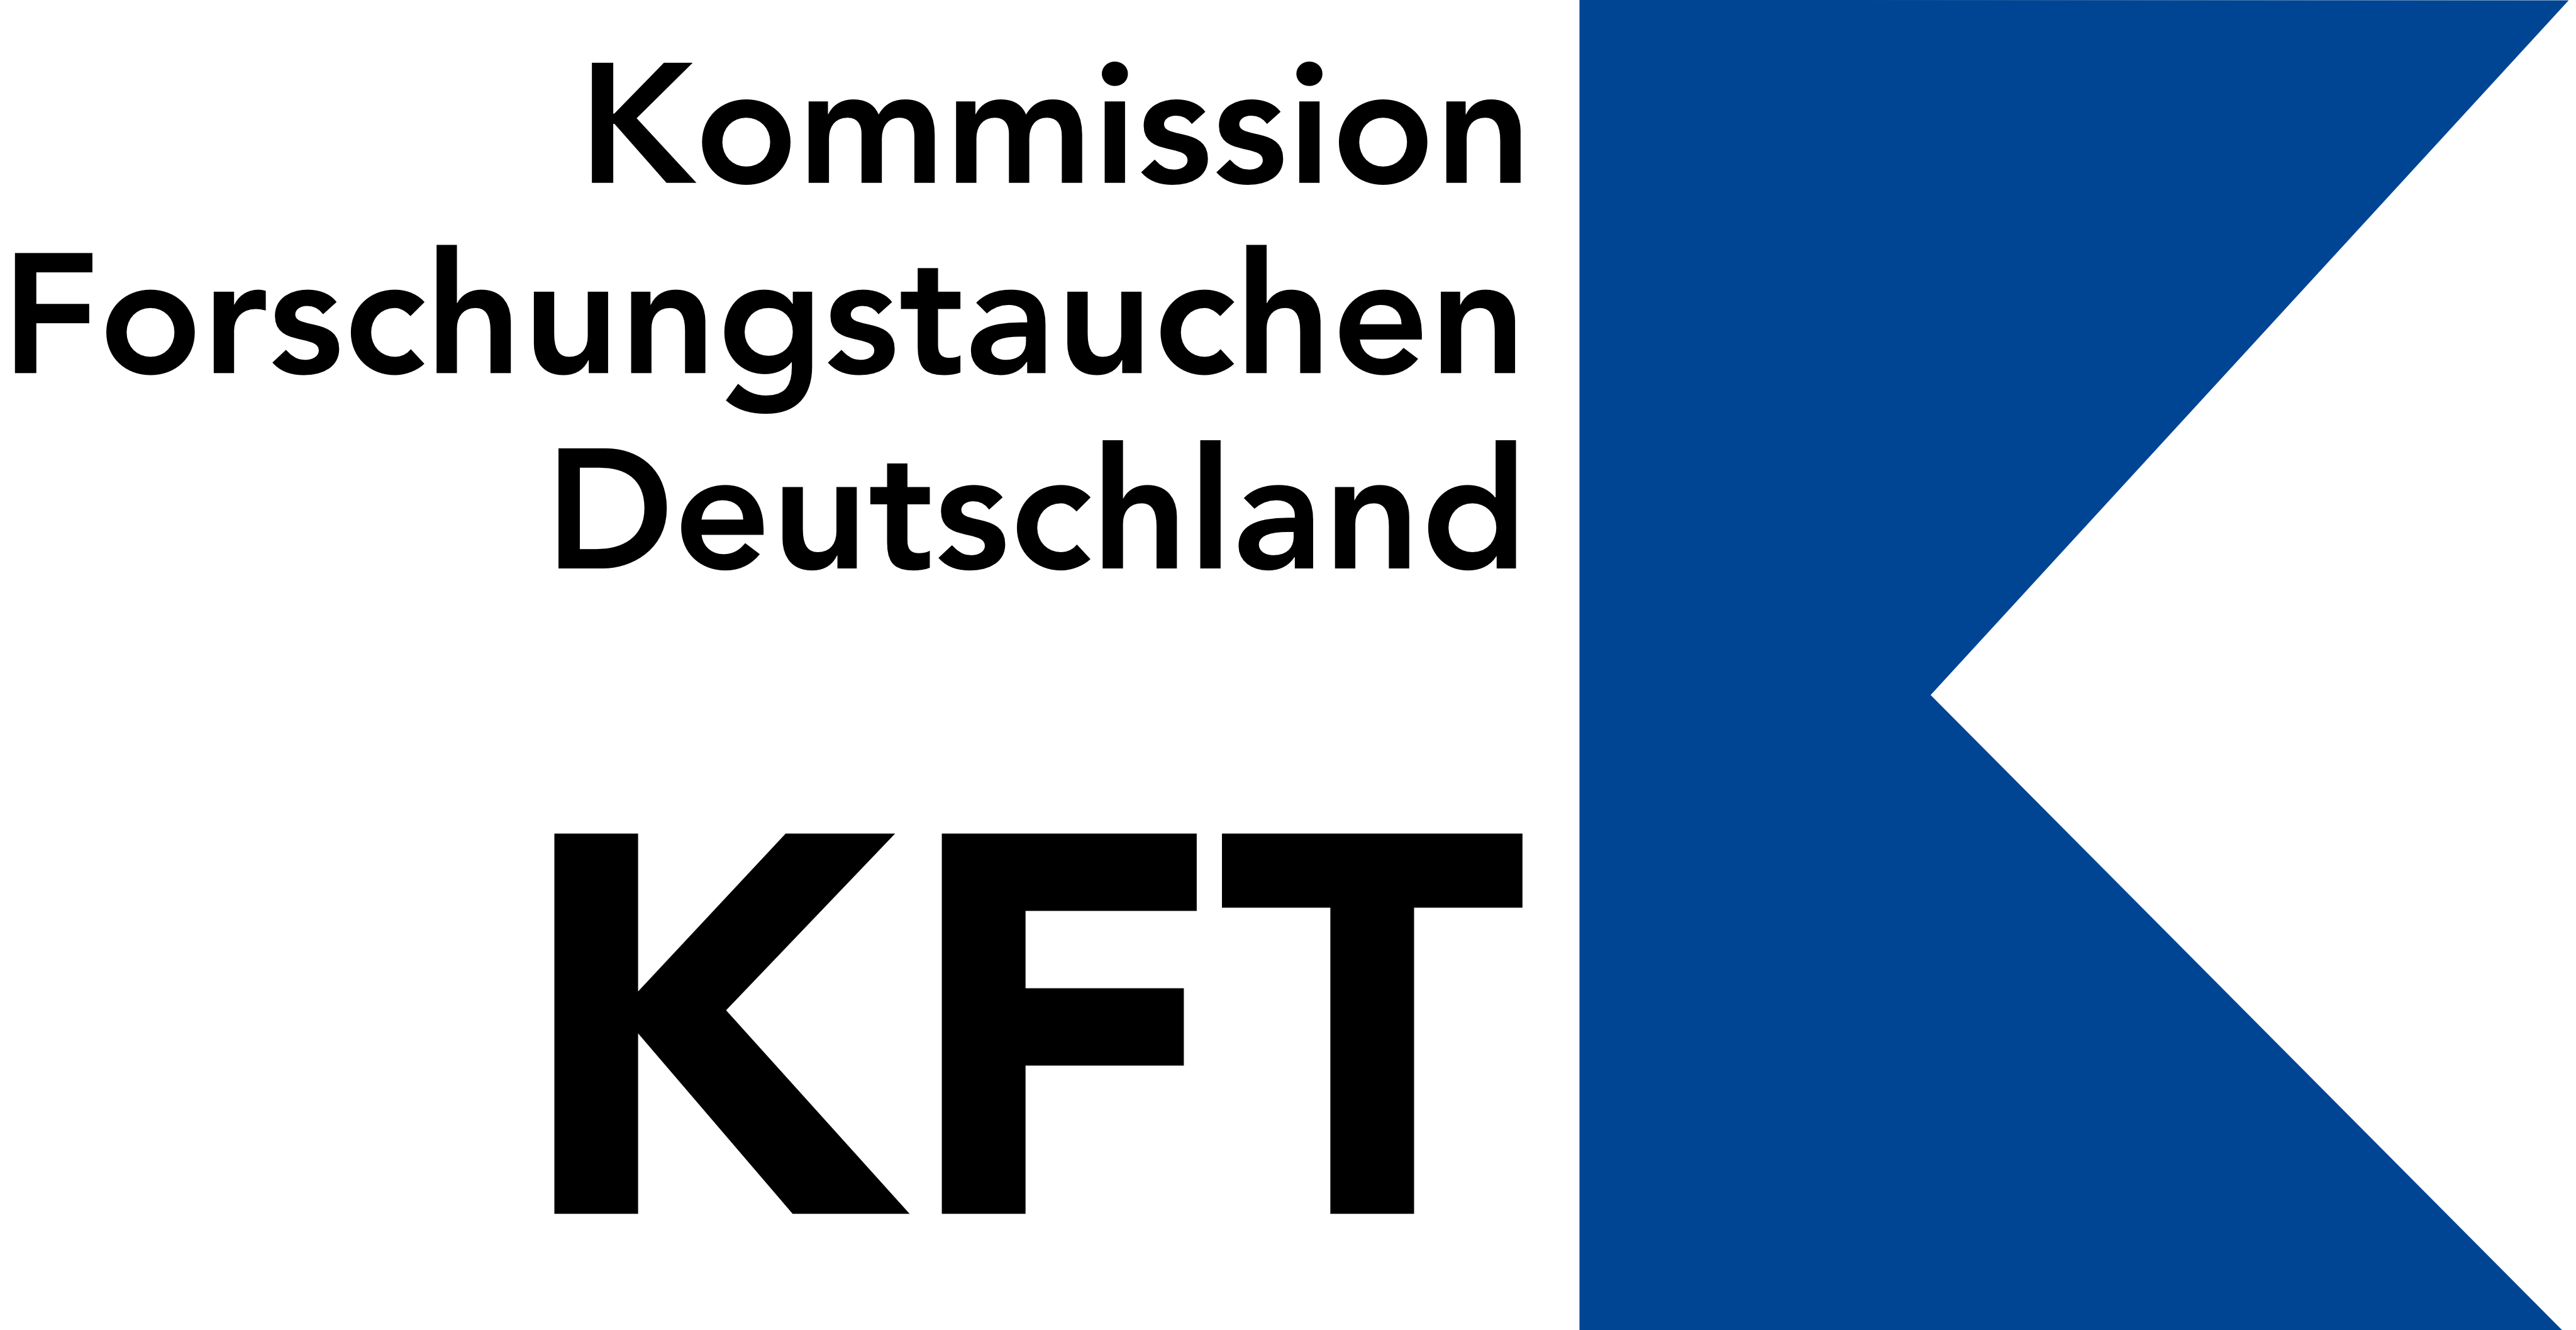 KFT_Logo